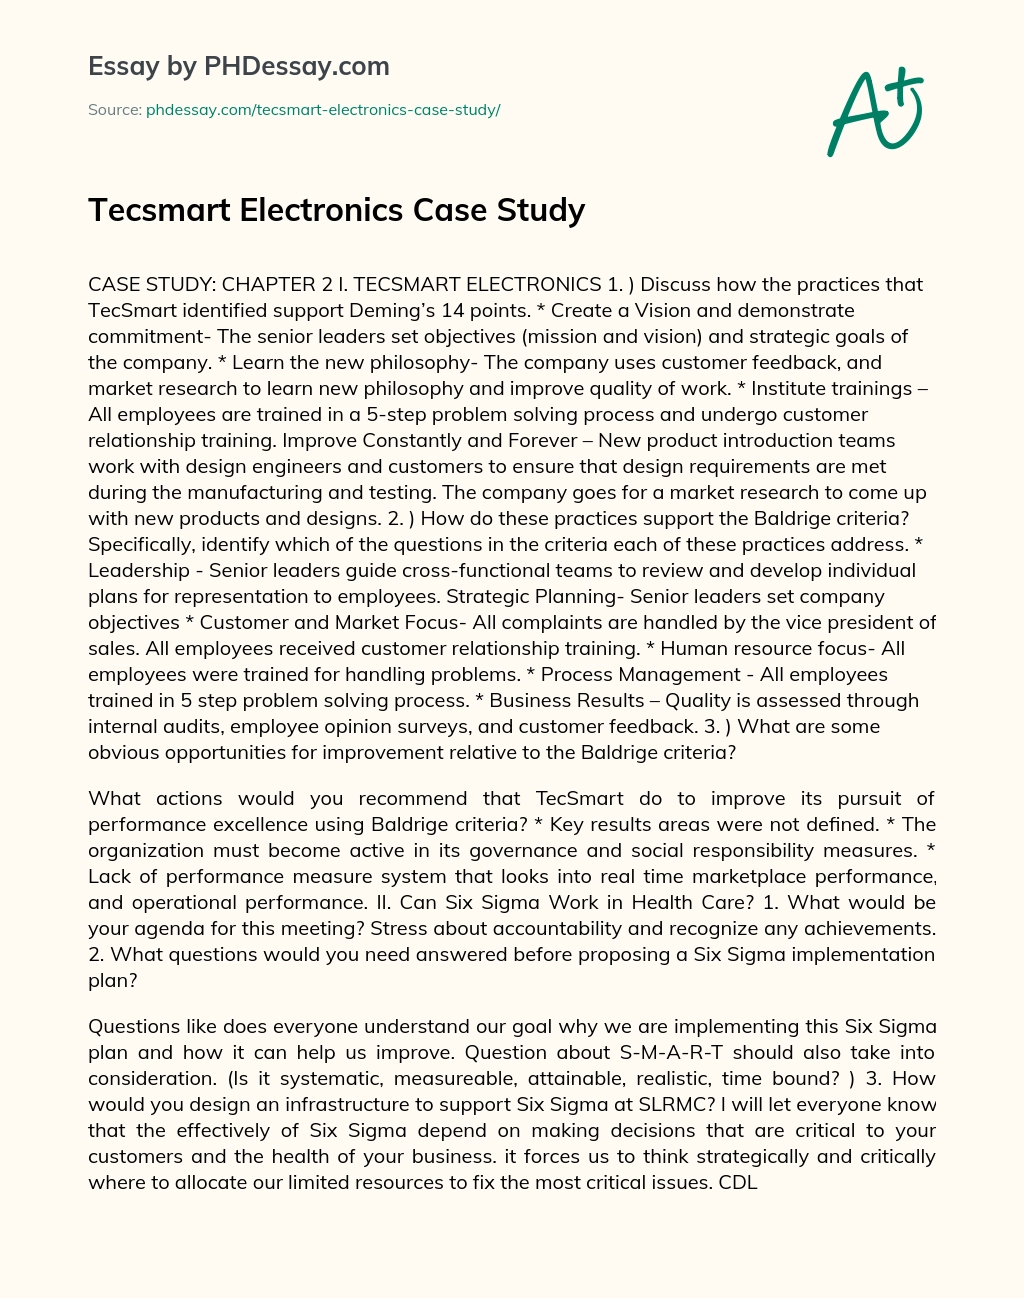 Tecsmart Electronics Case Study essay